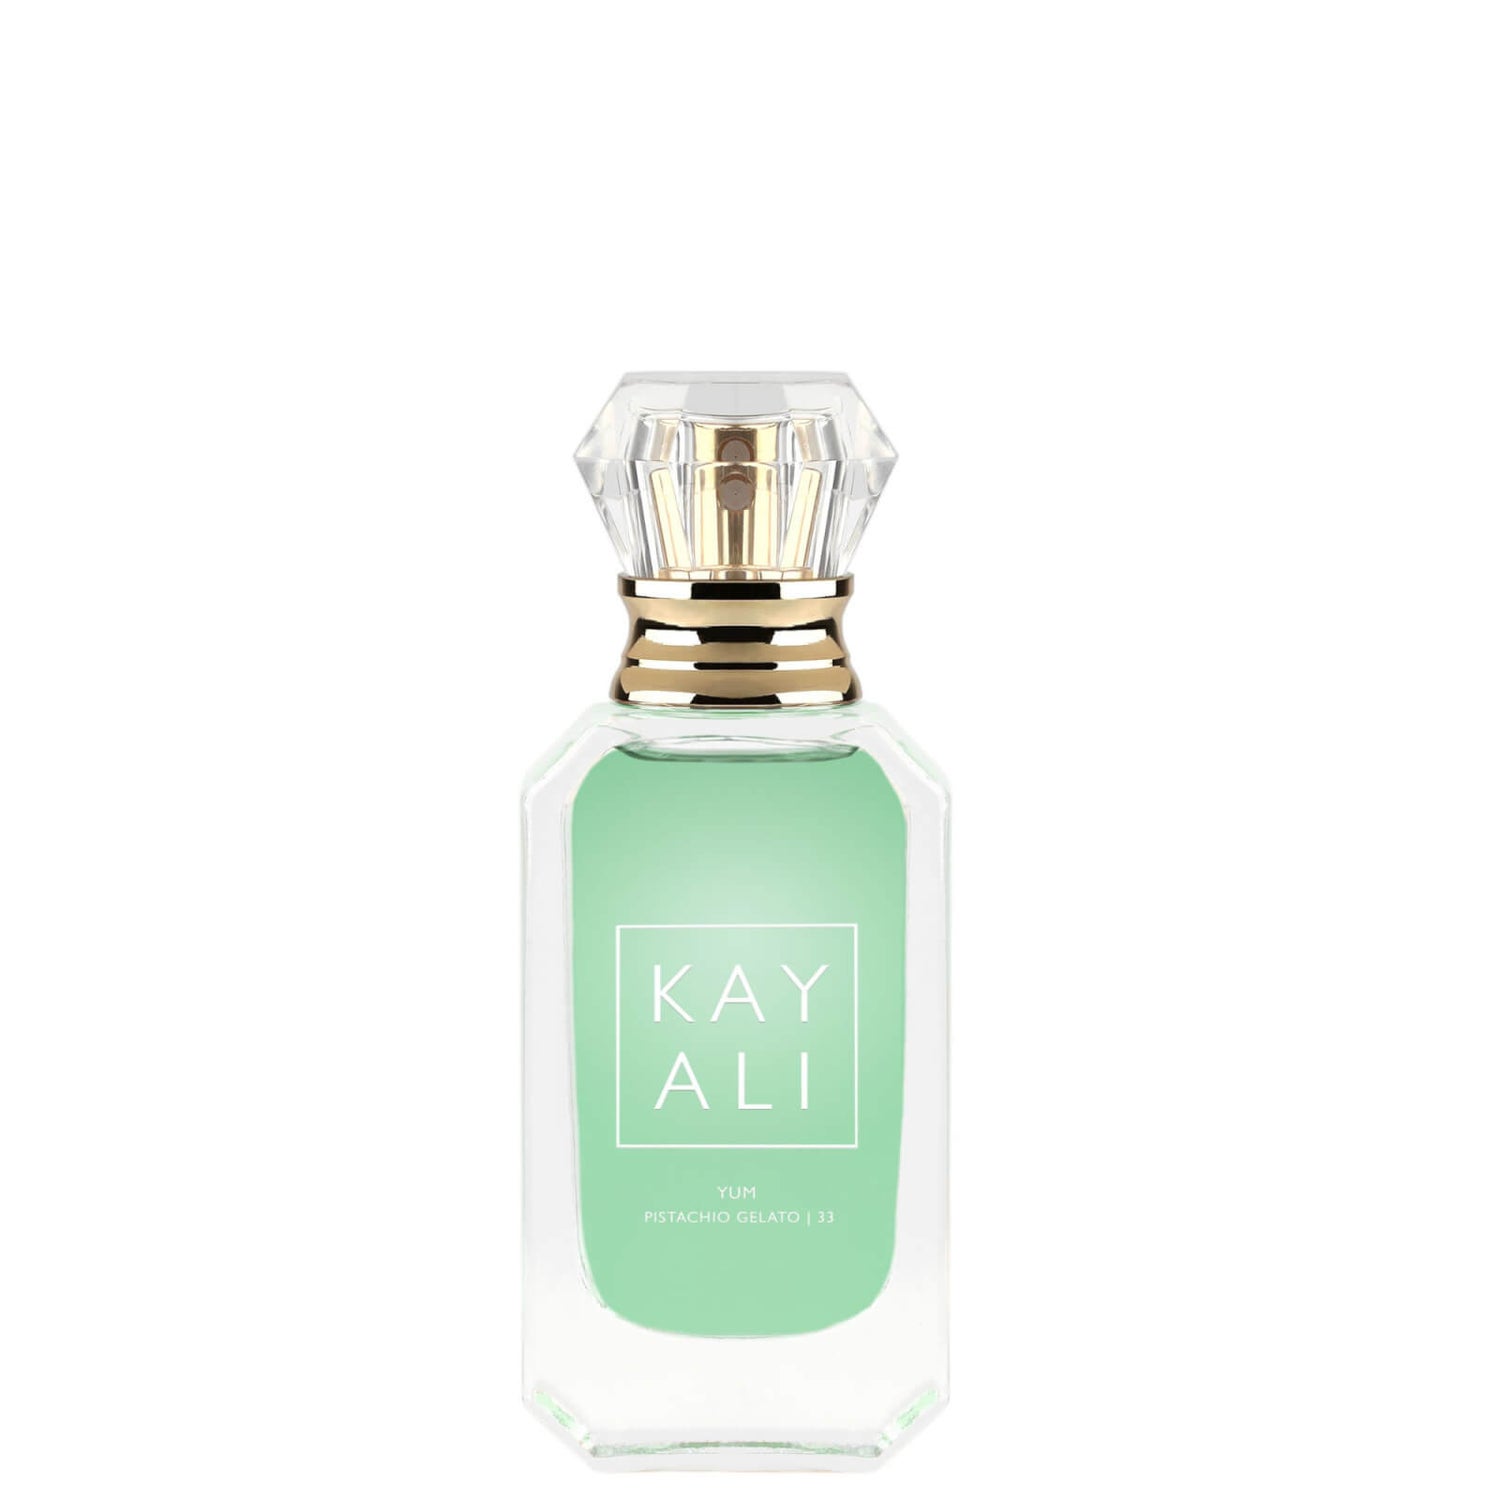 KAYALI Yum Pistachio Gelato 33 Eau de Parfum Intense 10ml | Cult Beauty